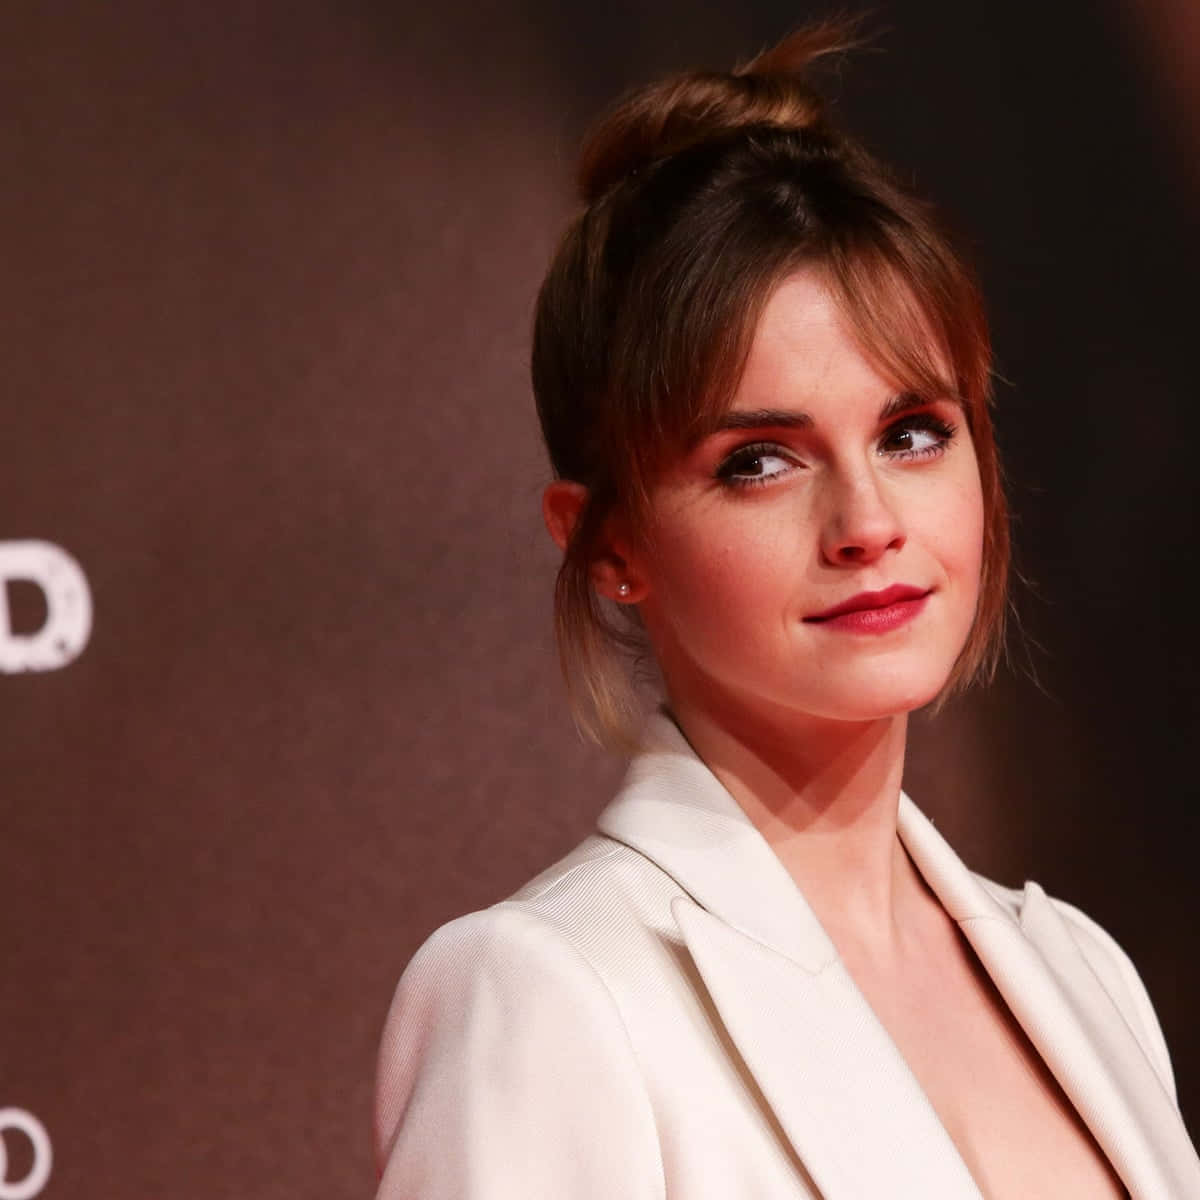 Emma Watson demonstrates her beauty and grace